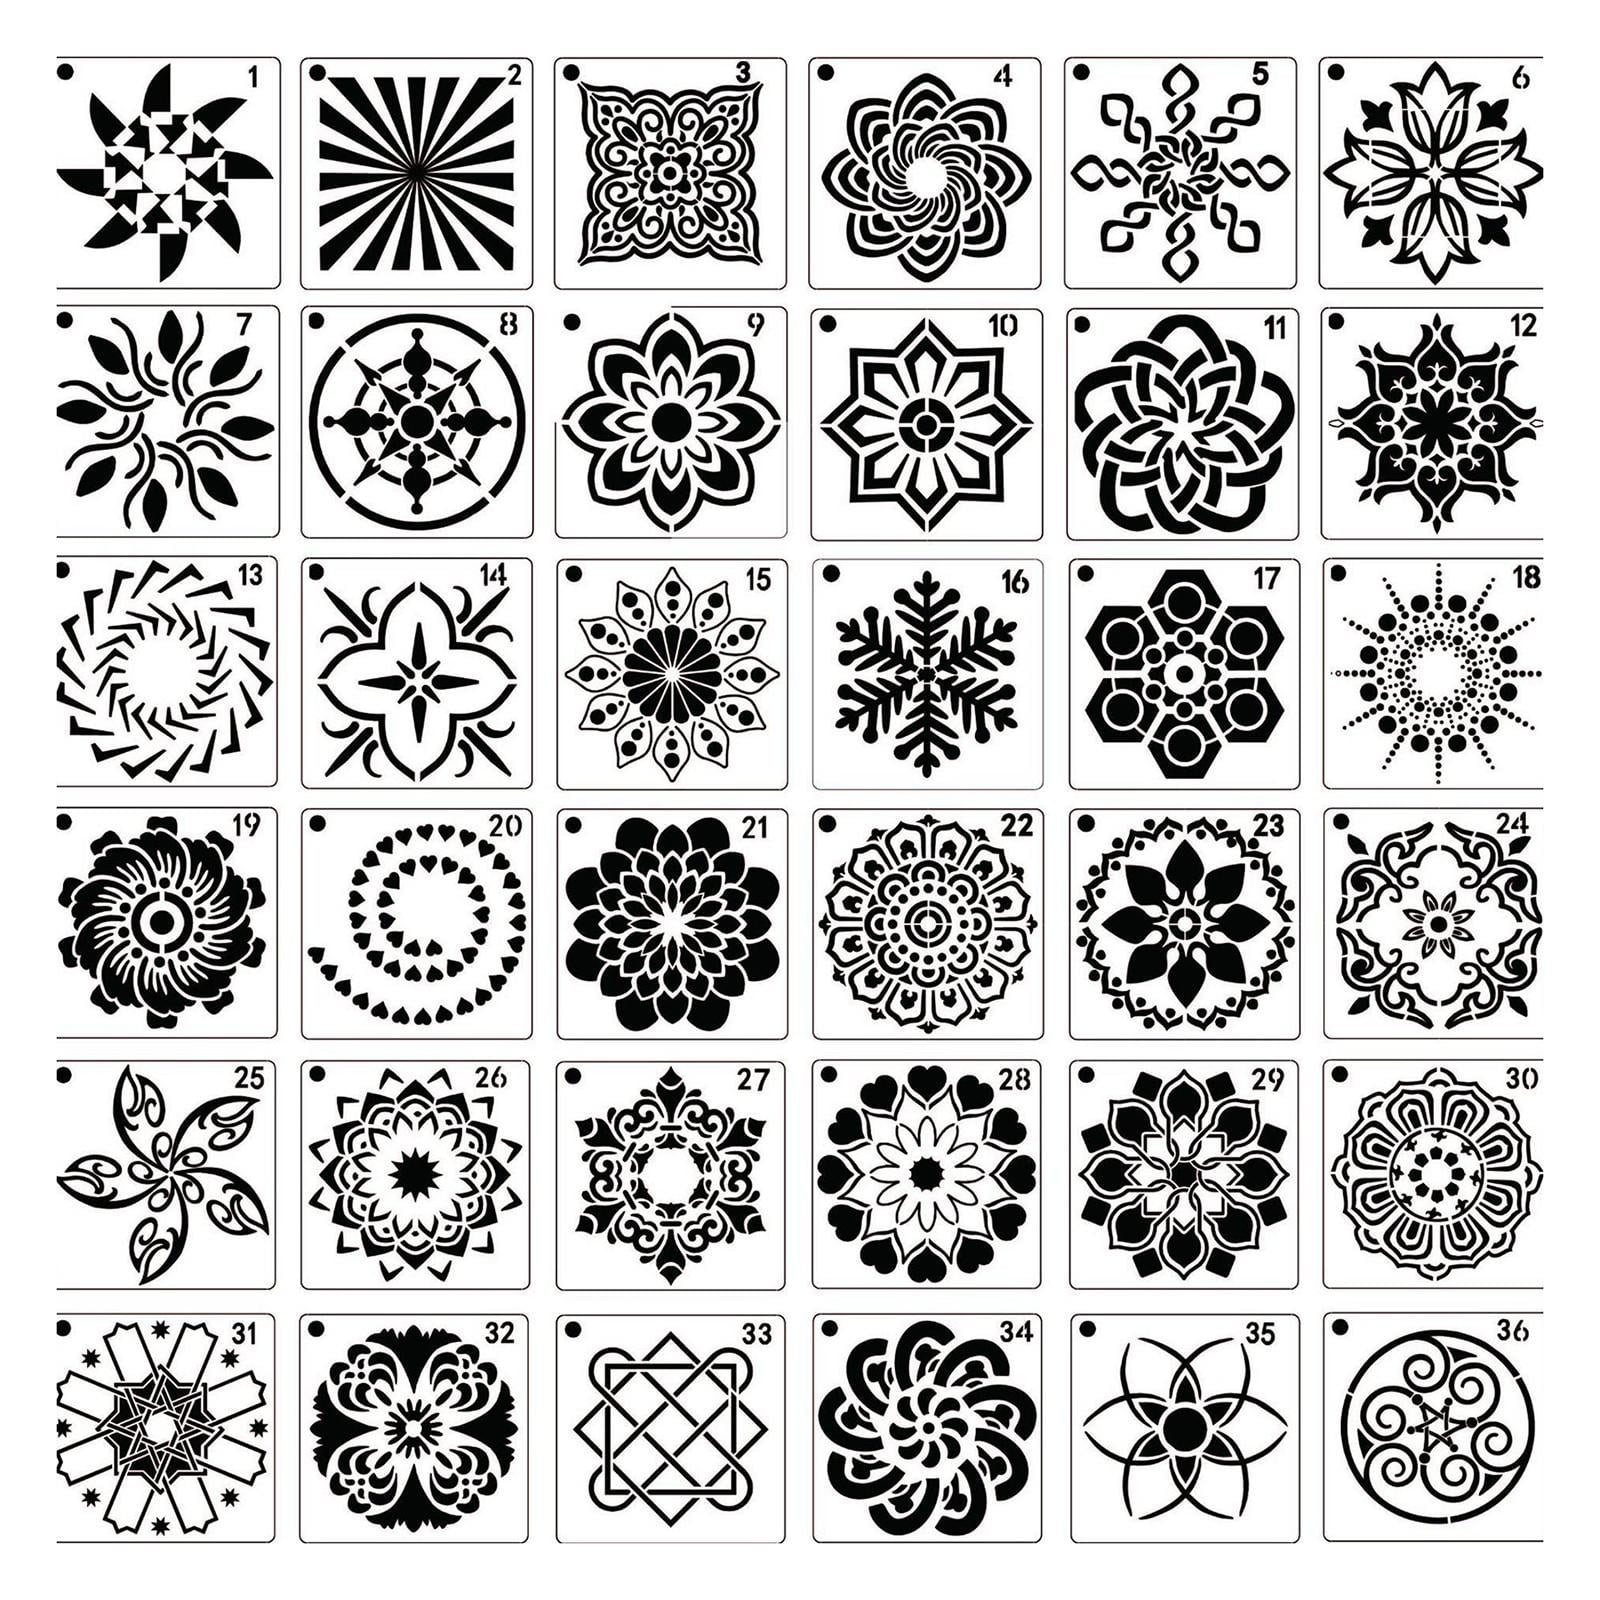 3 Mandala Stencils Dot Painting Templates, Reusable Mandala Drawing Stencils Rock Furniture Art Projects(3.5x3.5 inch), Size: 3.6 x 3.6, White